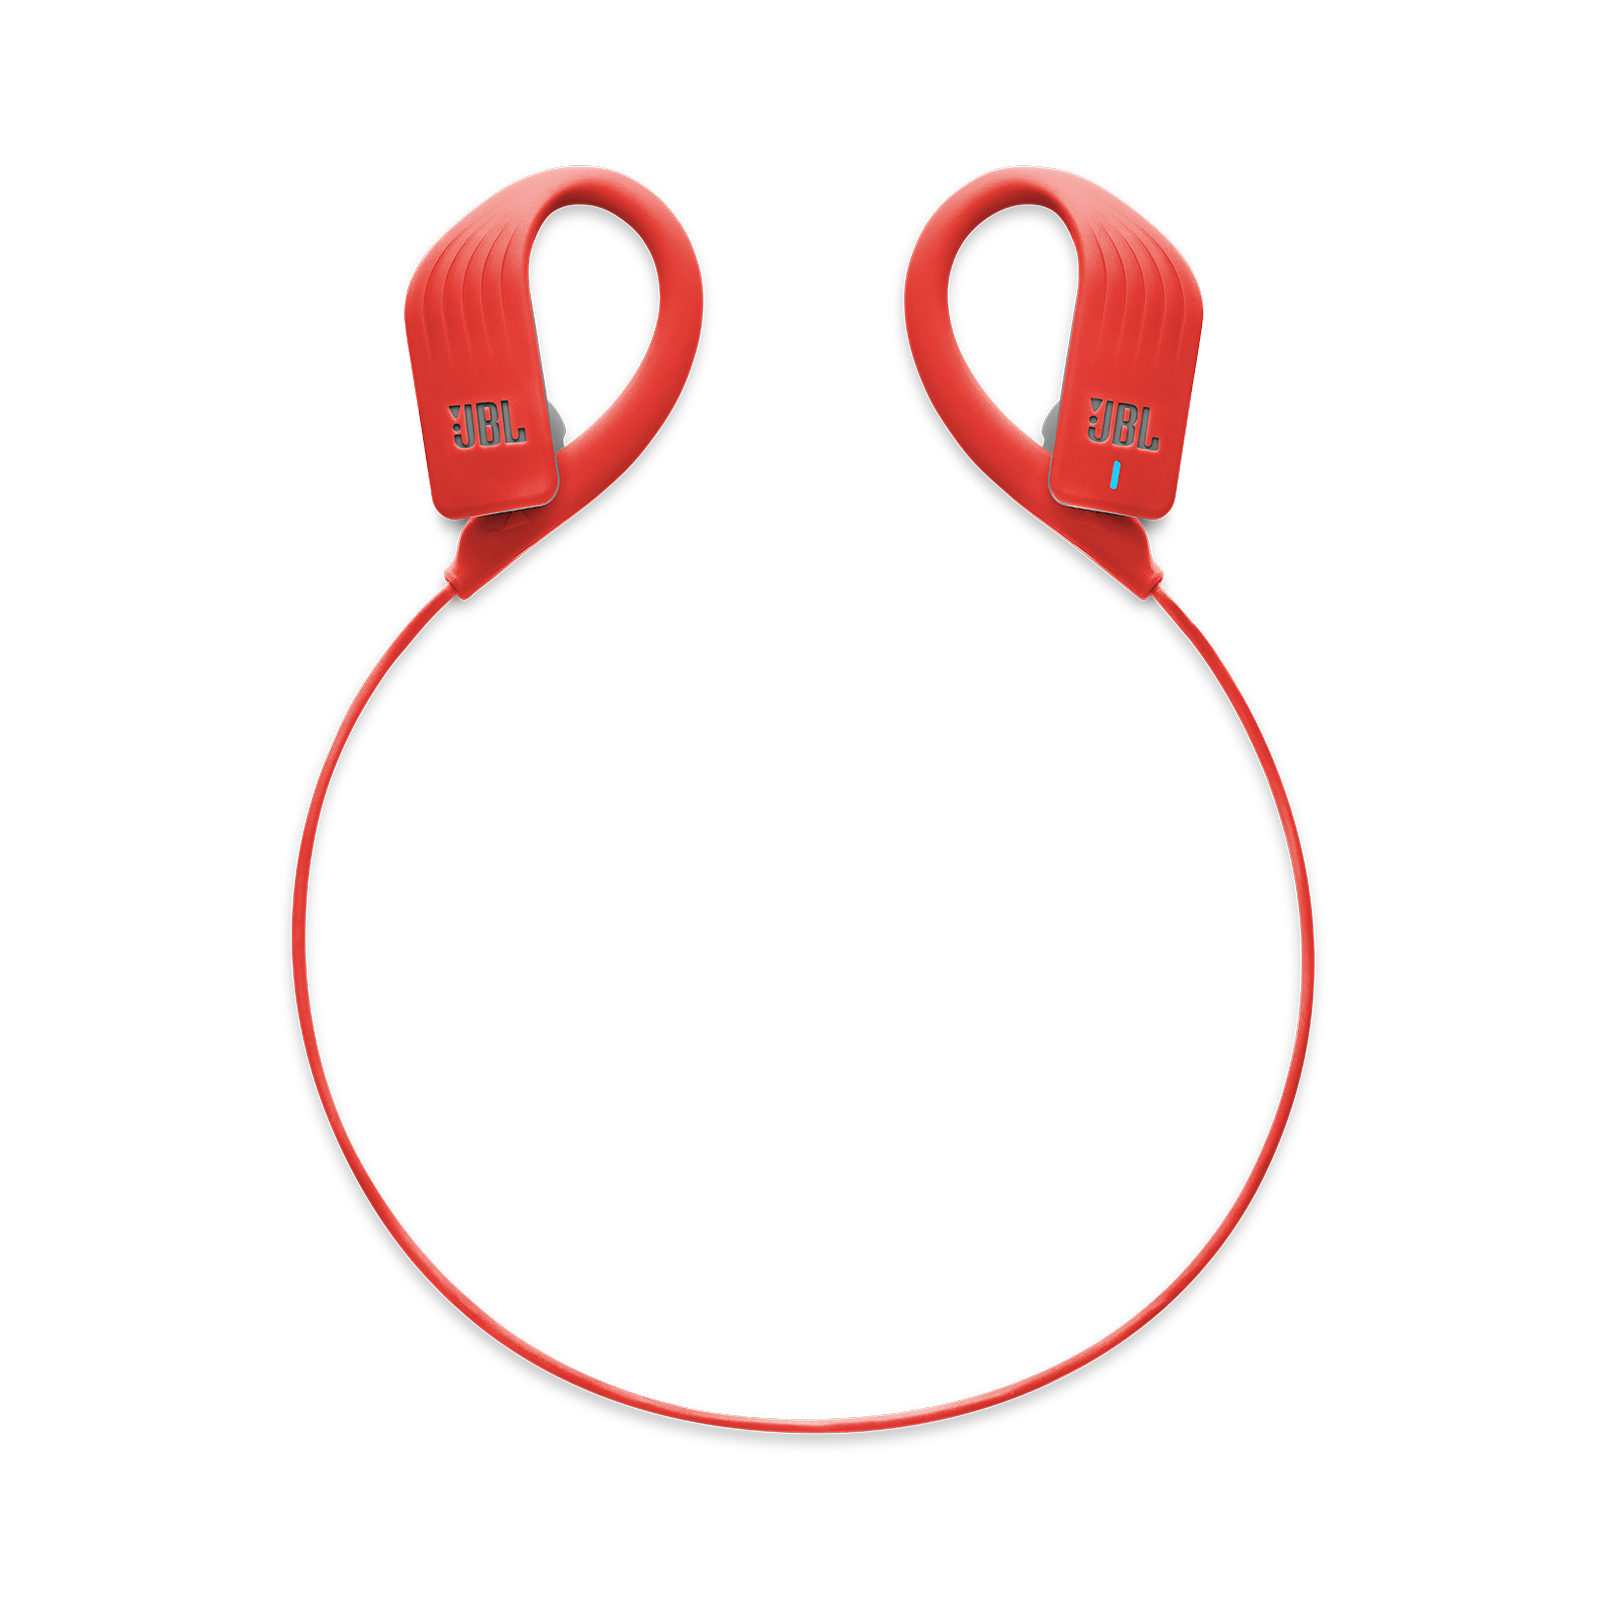 JBL Endurance SPRINT - Red - Waterproof Wireless In-Ear Sport Headphones - Detailshot 2